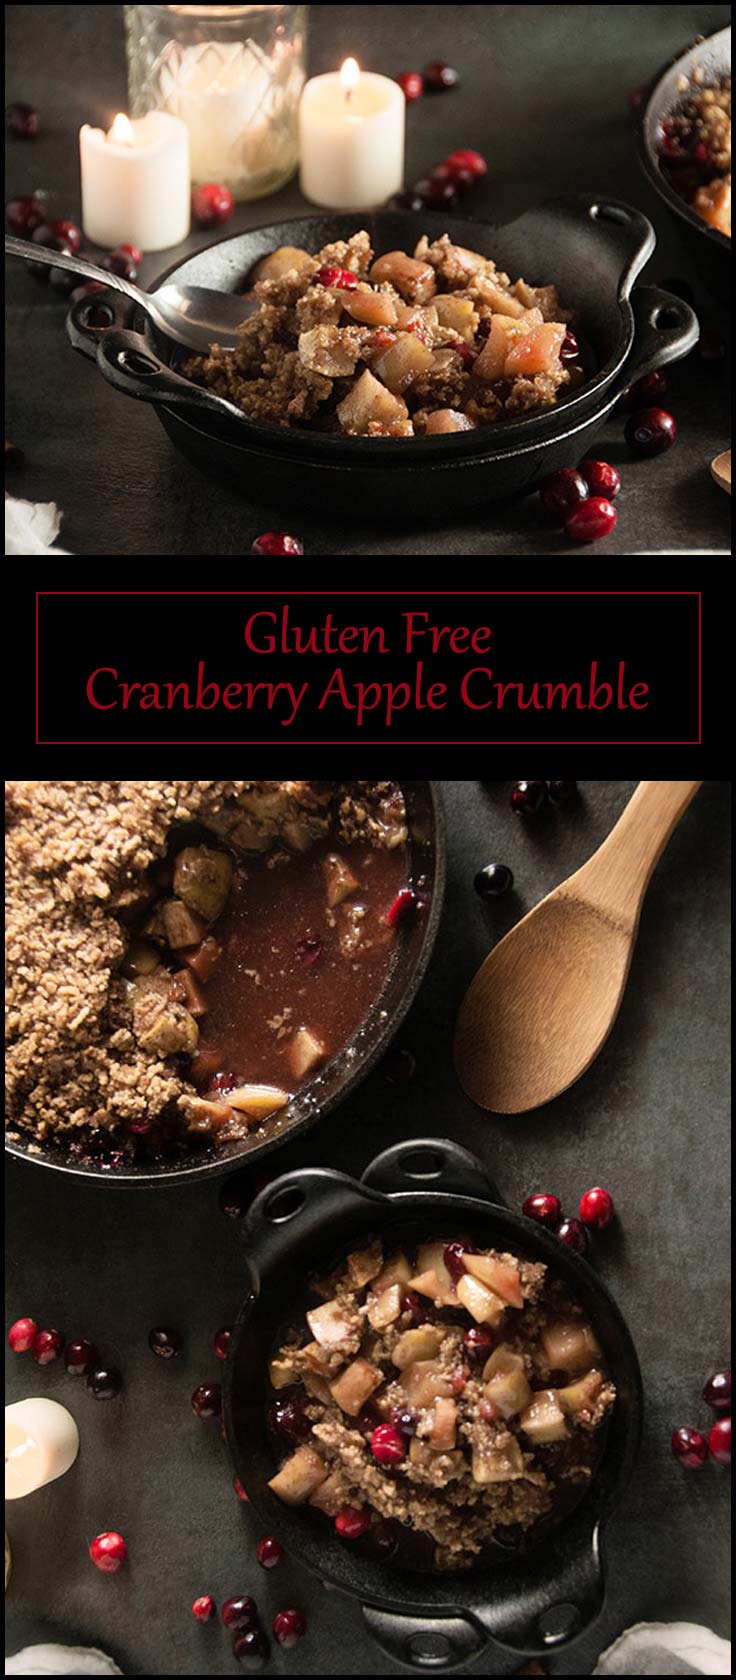 Gluten Free Cranberry Apple Crumble from www.seasonedsprinkles.com